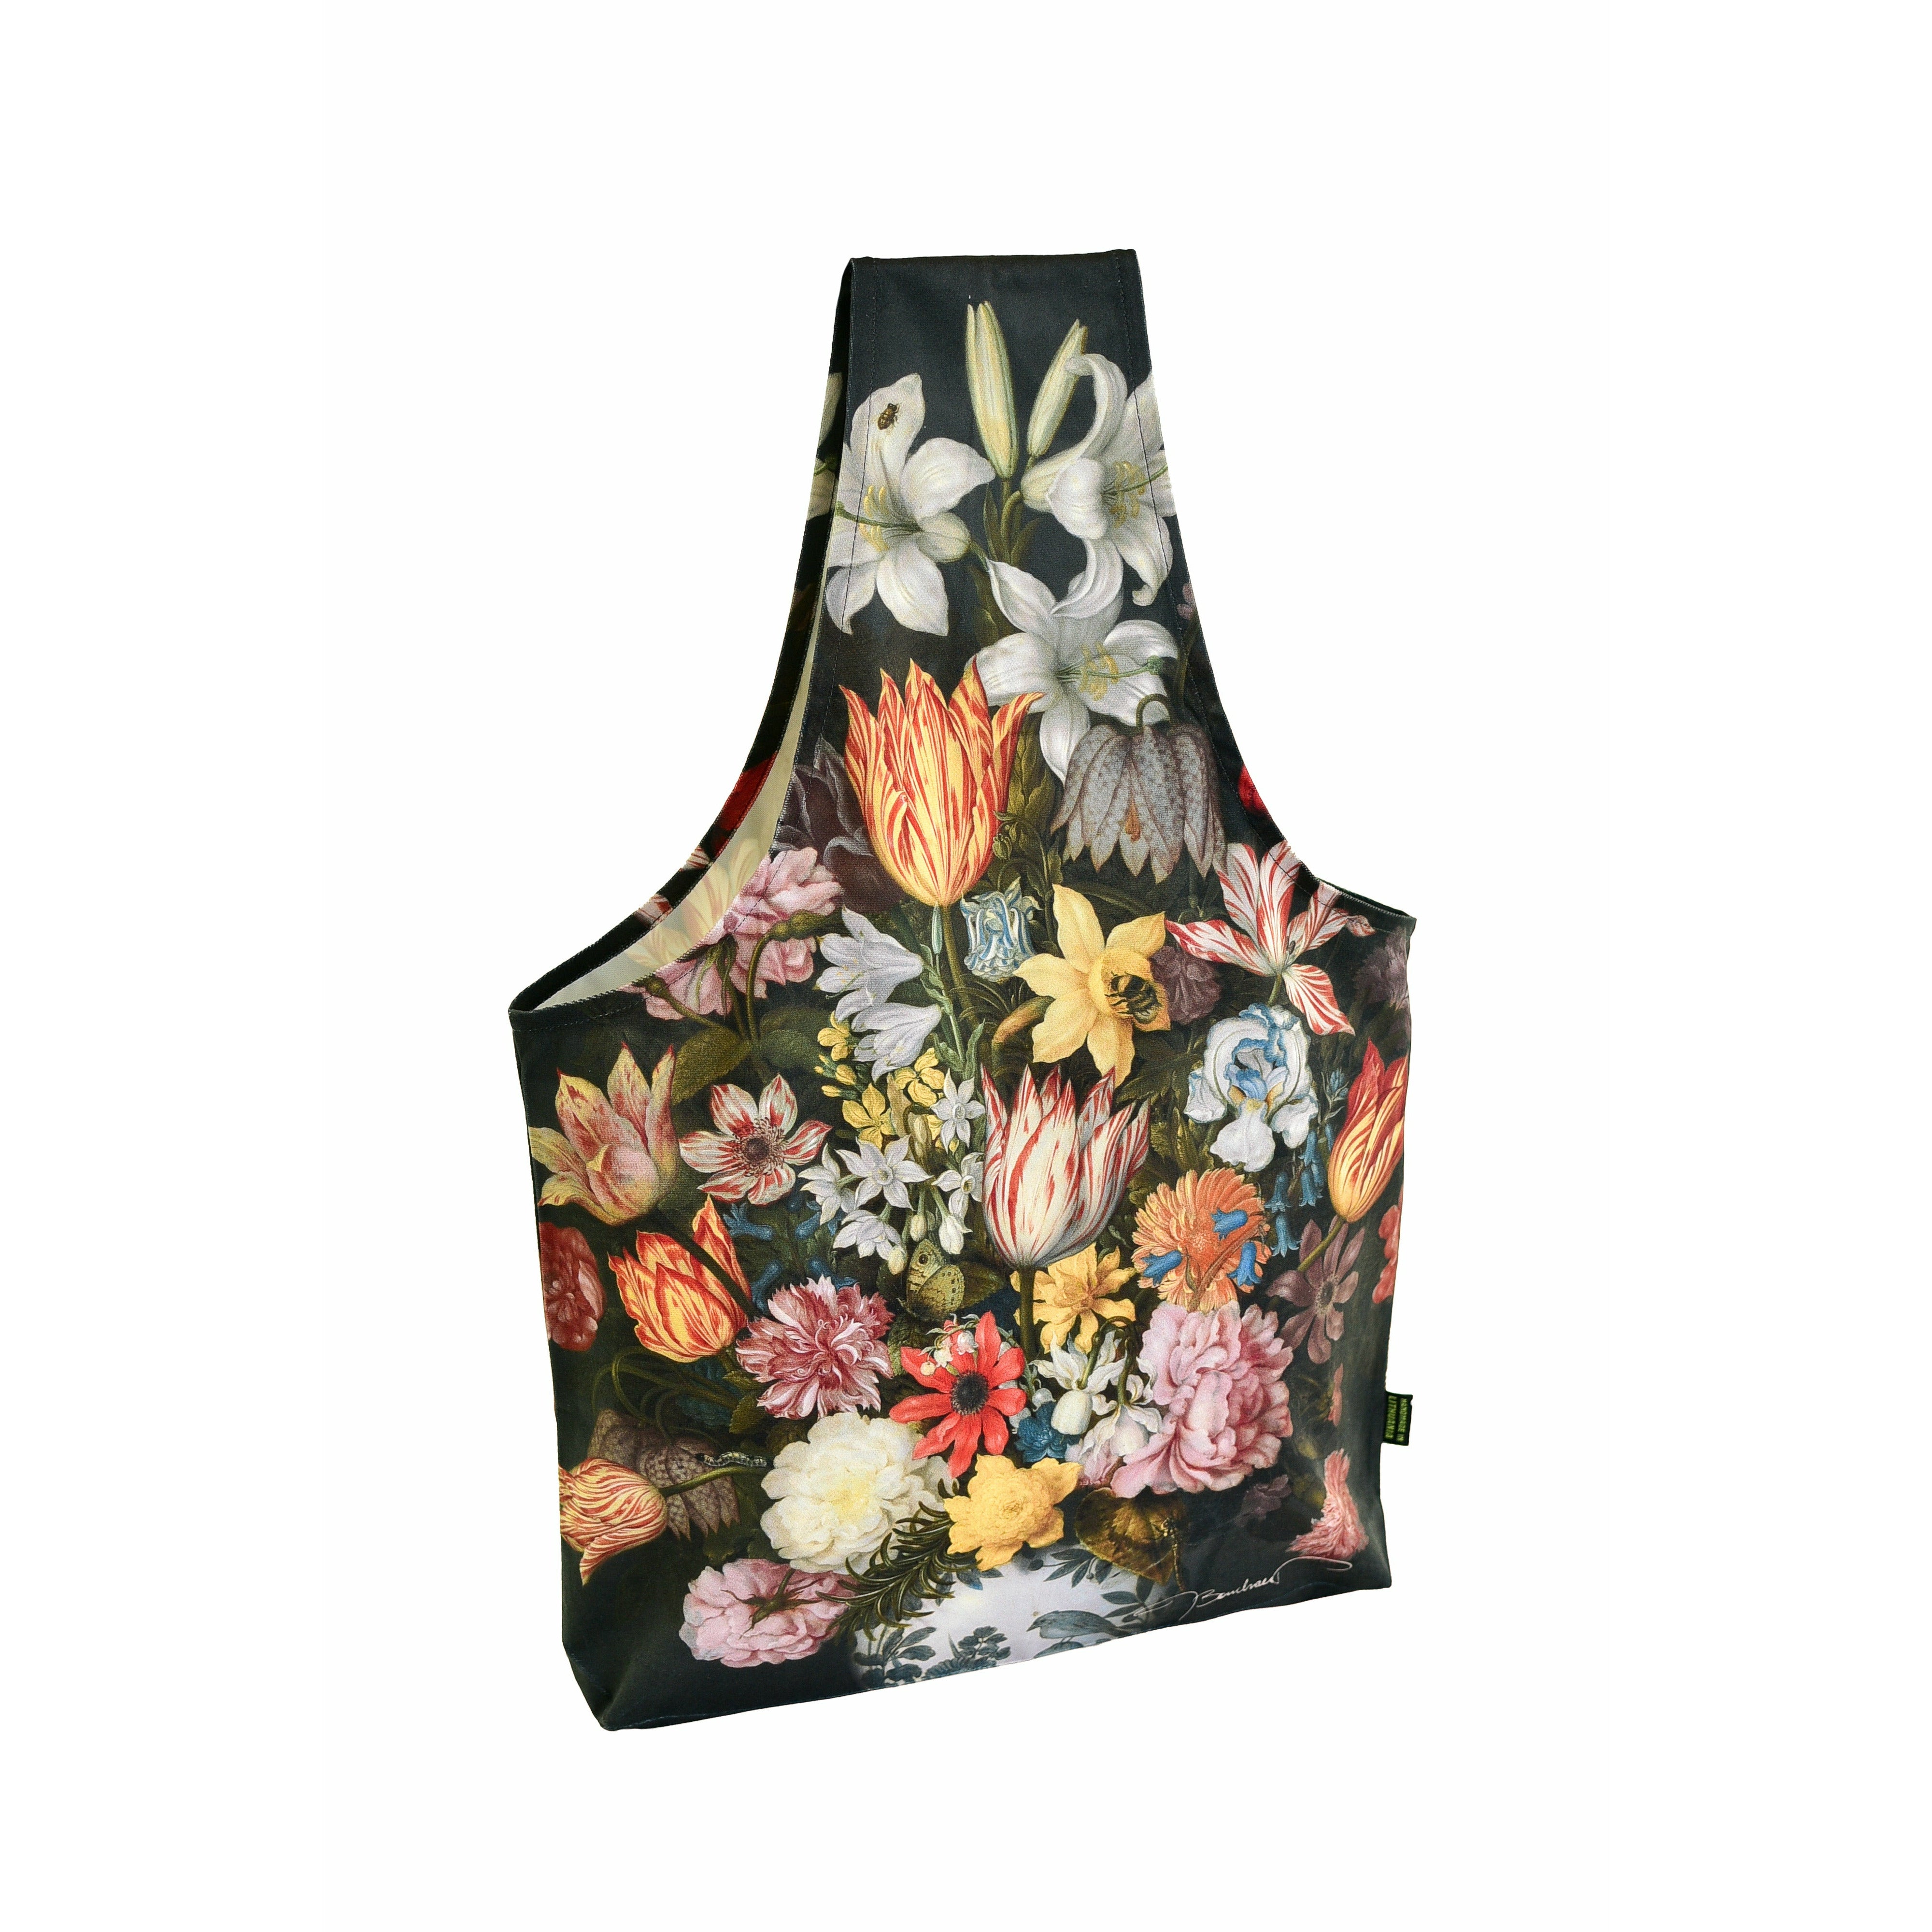 Gegužinis krepšys Ambrosius Bosschaert "Still Life Of Flowers In A Wan-Li Vase"